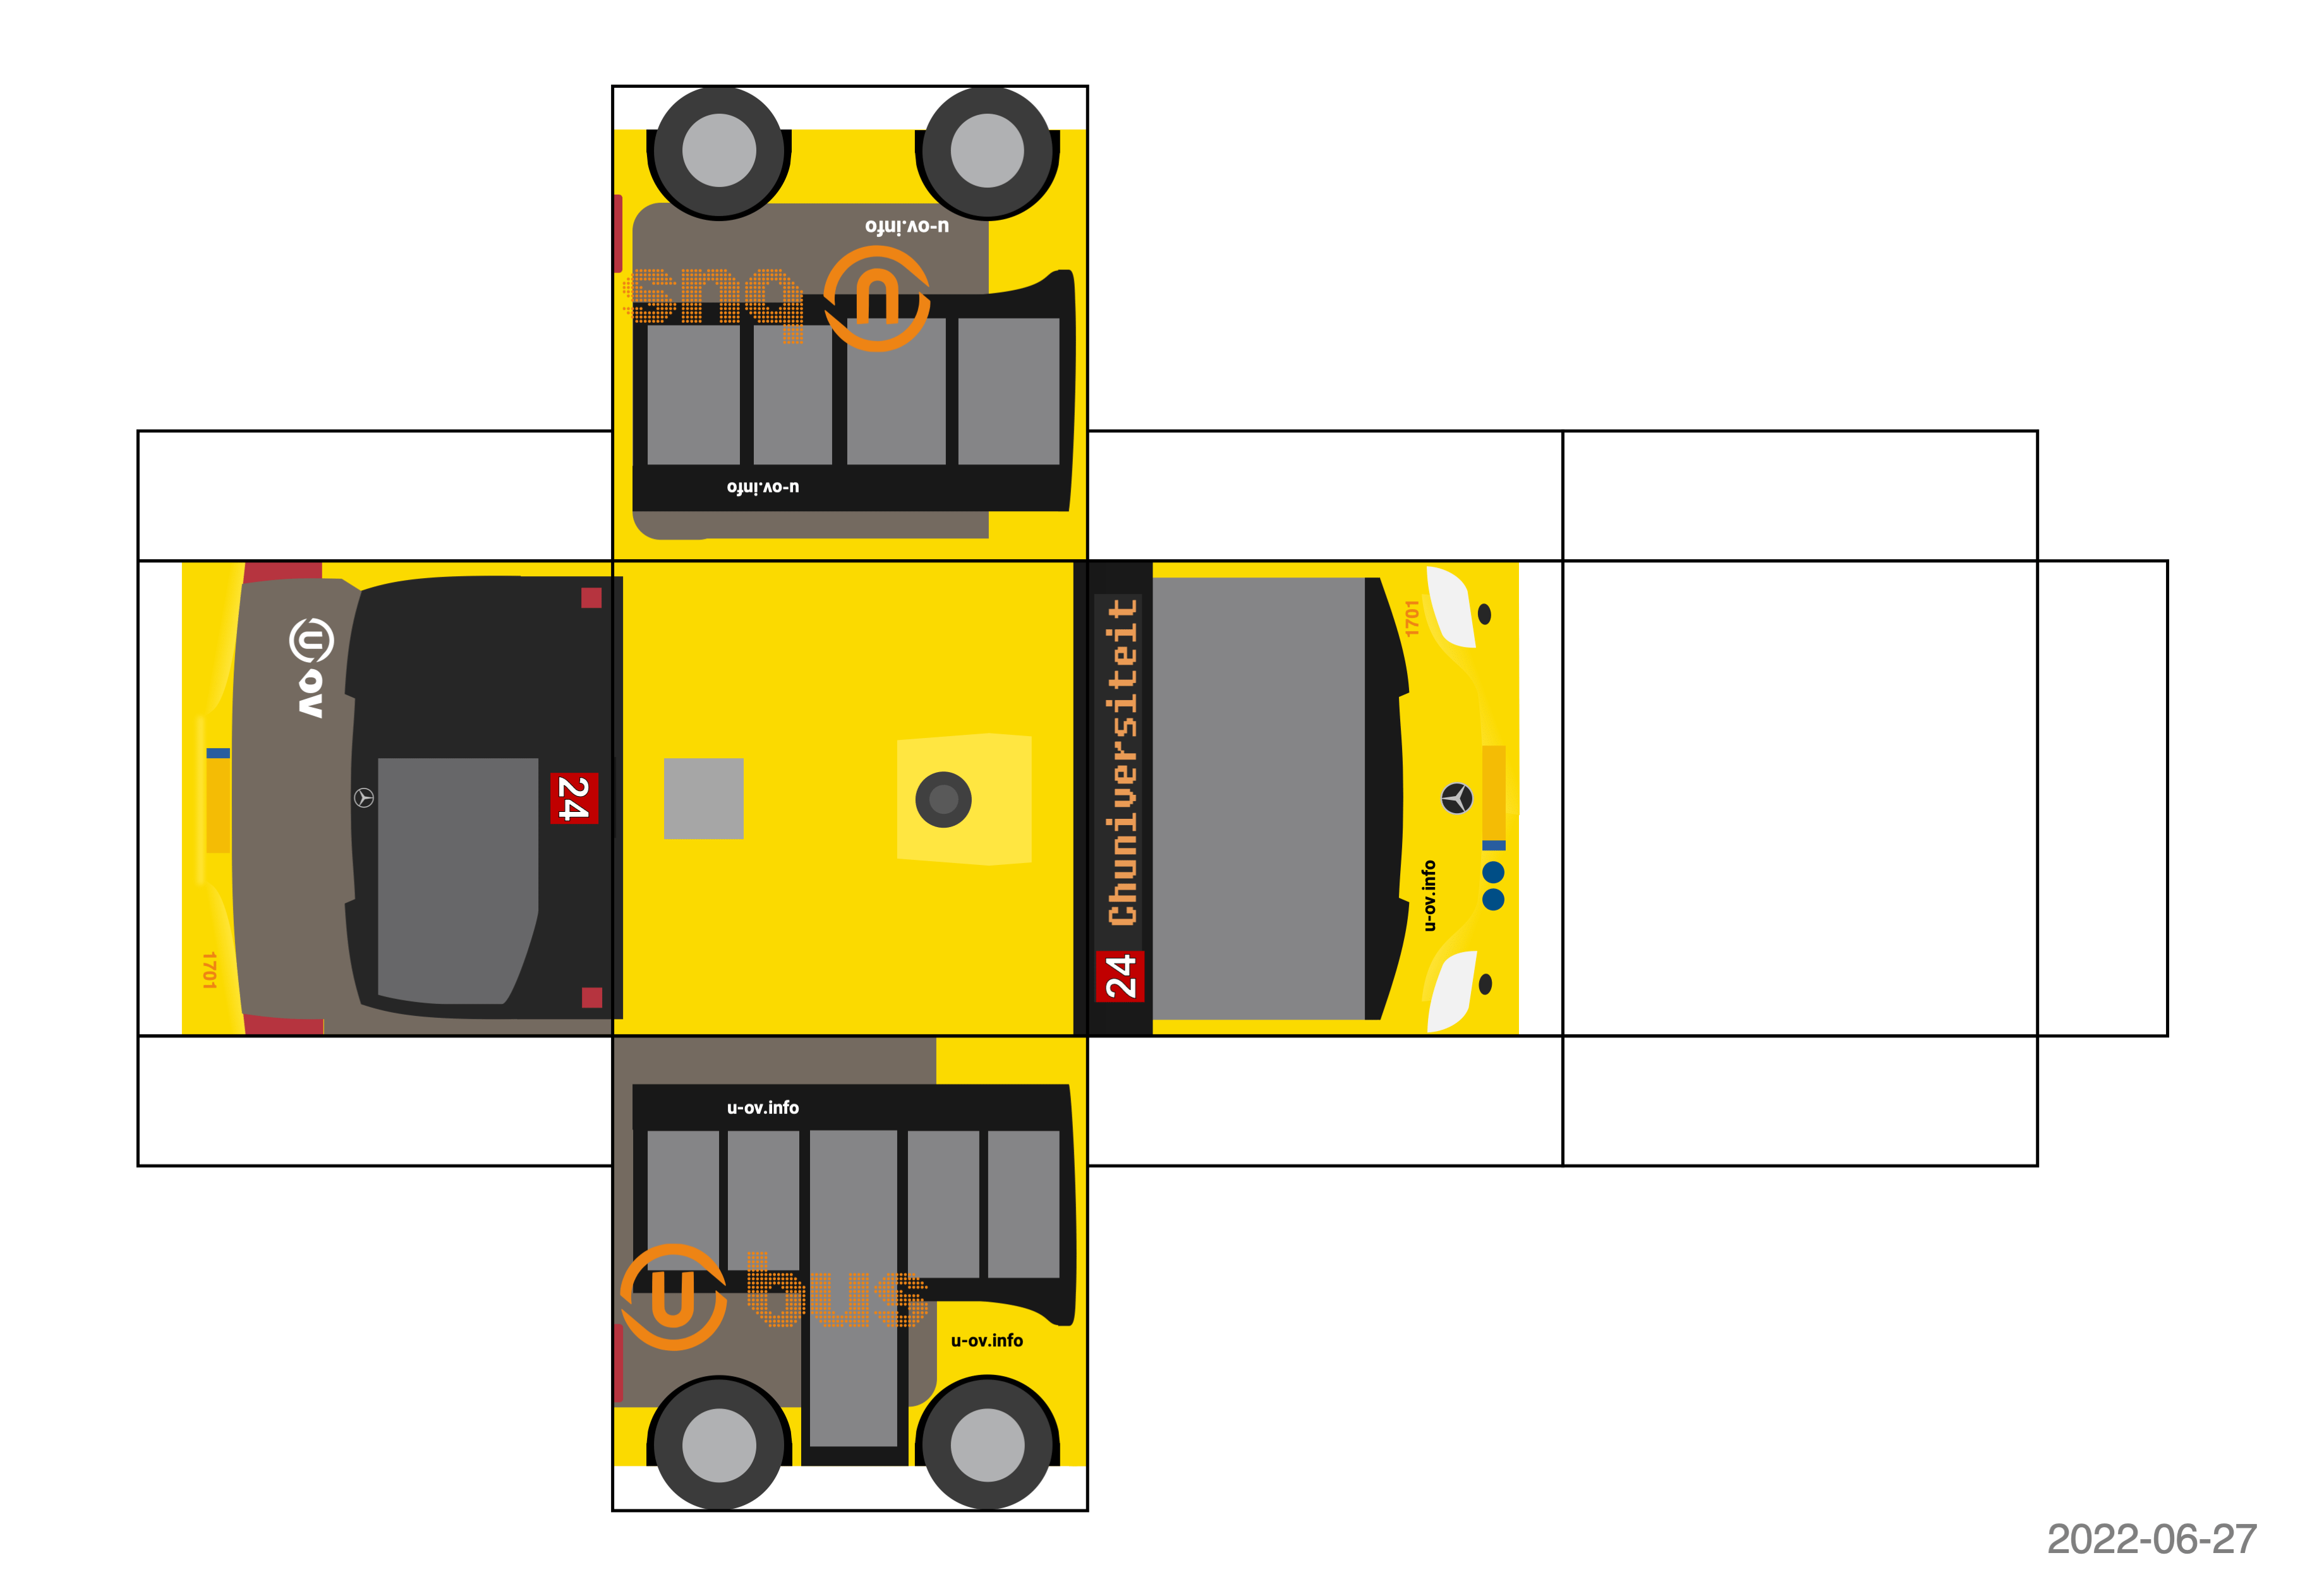 Papercraft template fora bus with U-OV branding